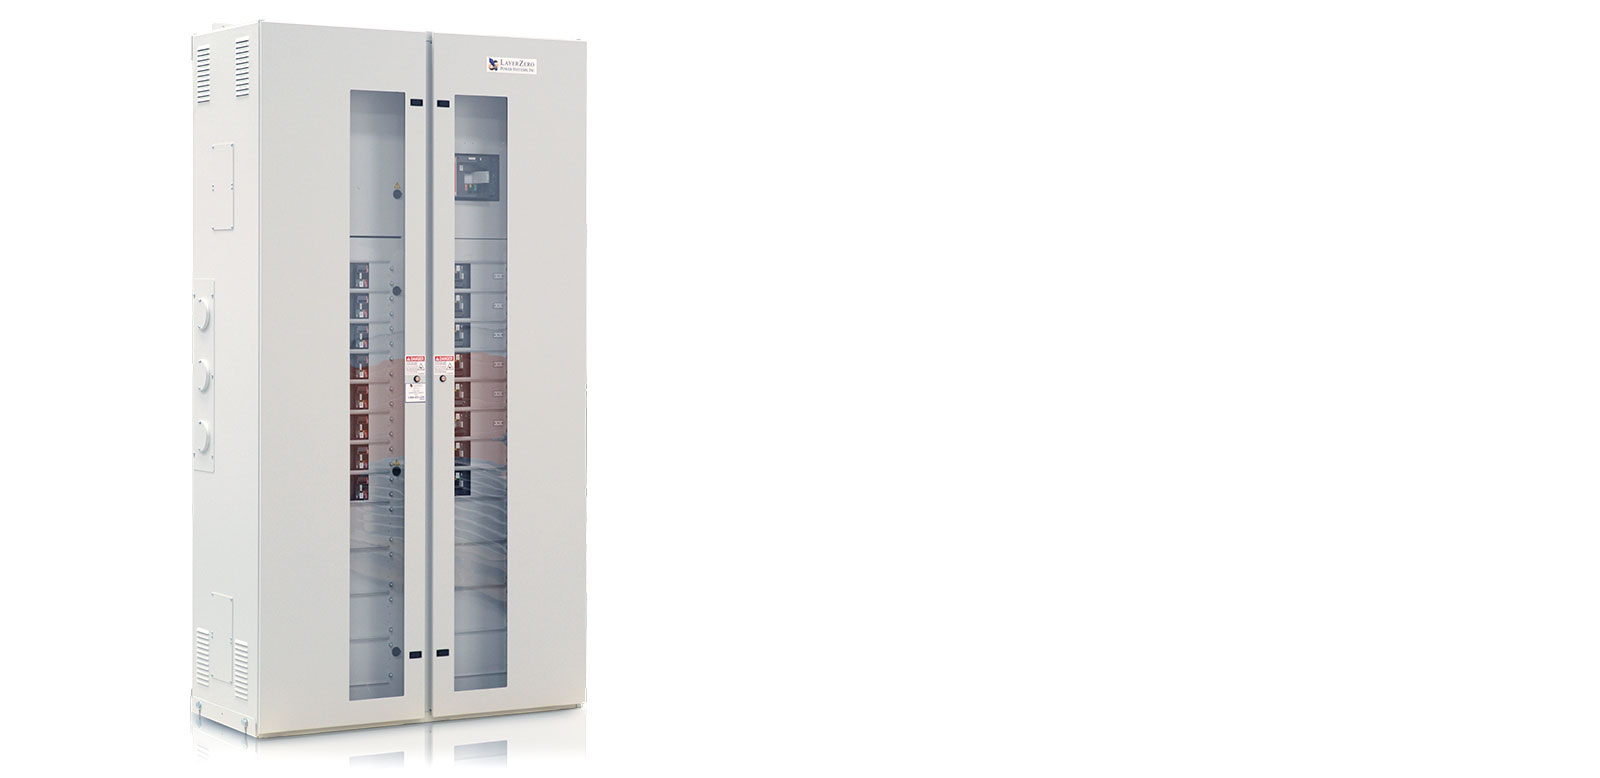 Series 70: ePanel-HD2 High-Density Wall-Mounted Power Panel